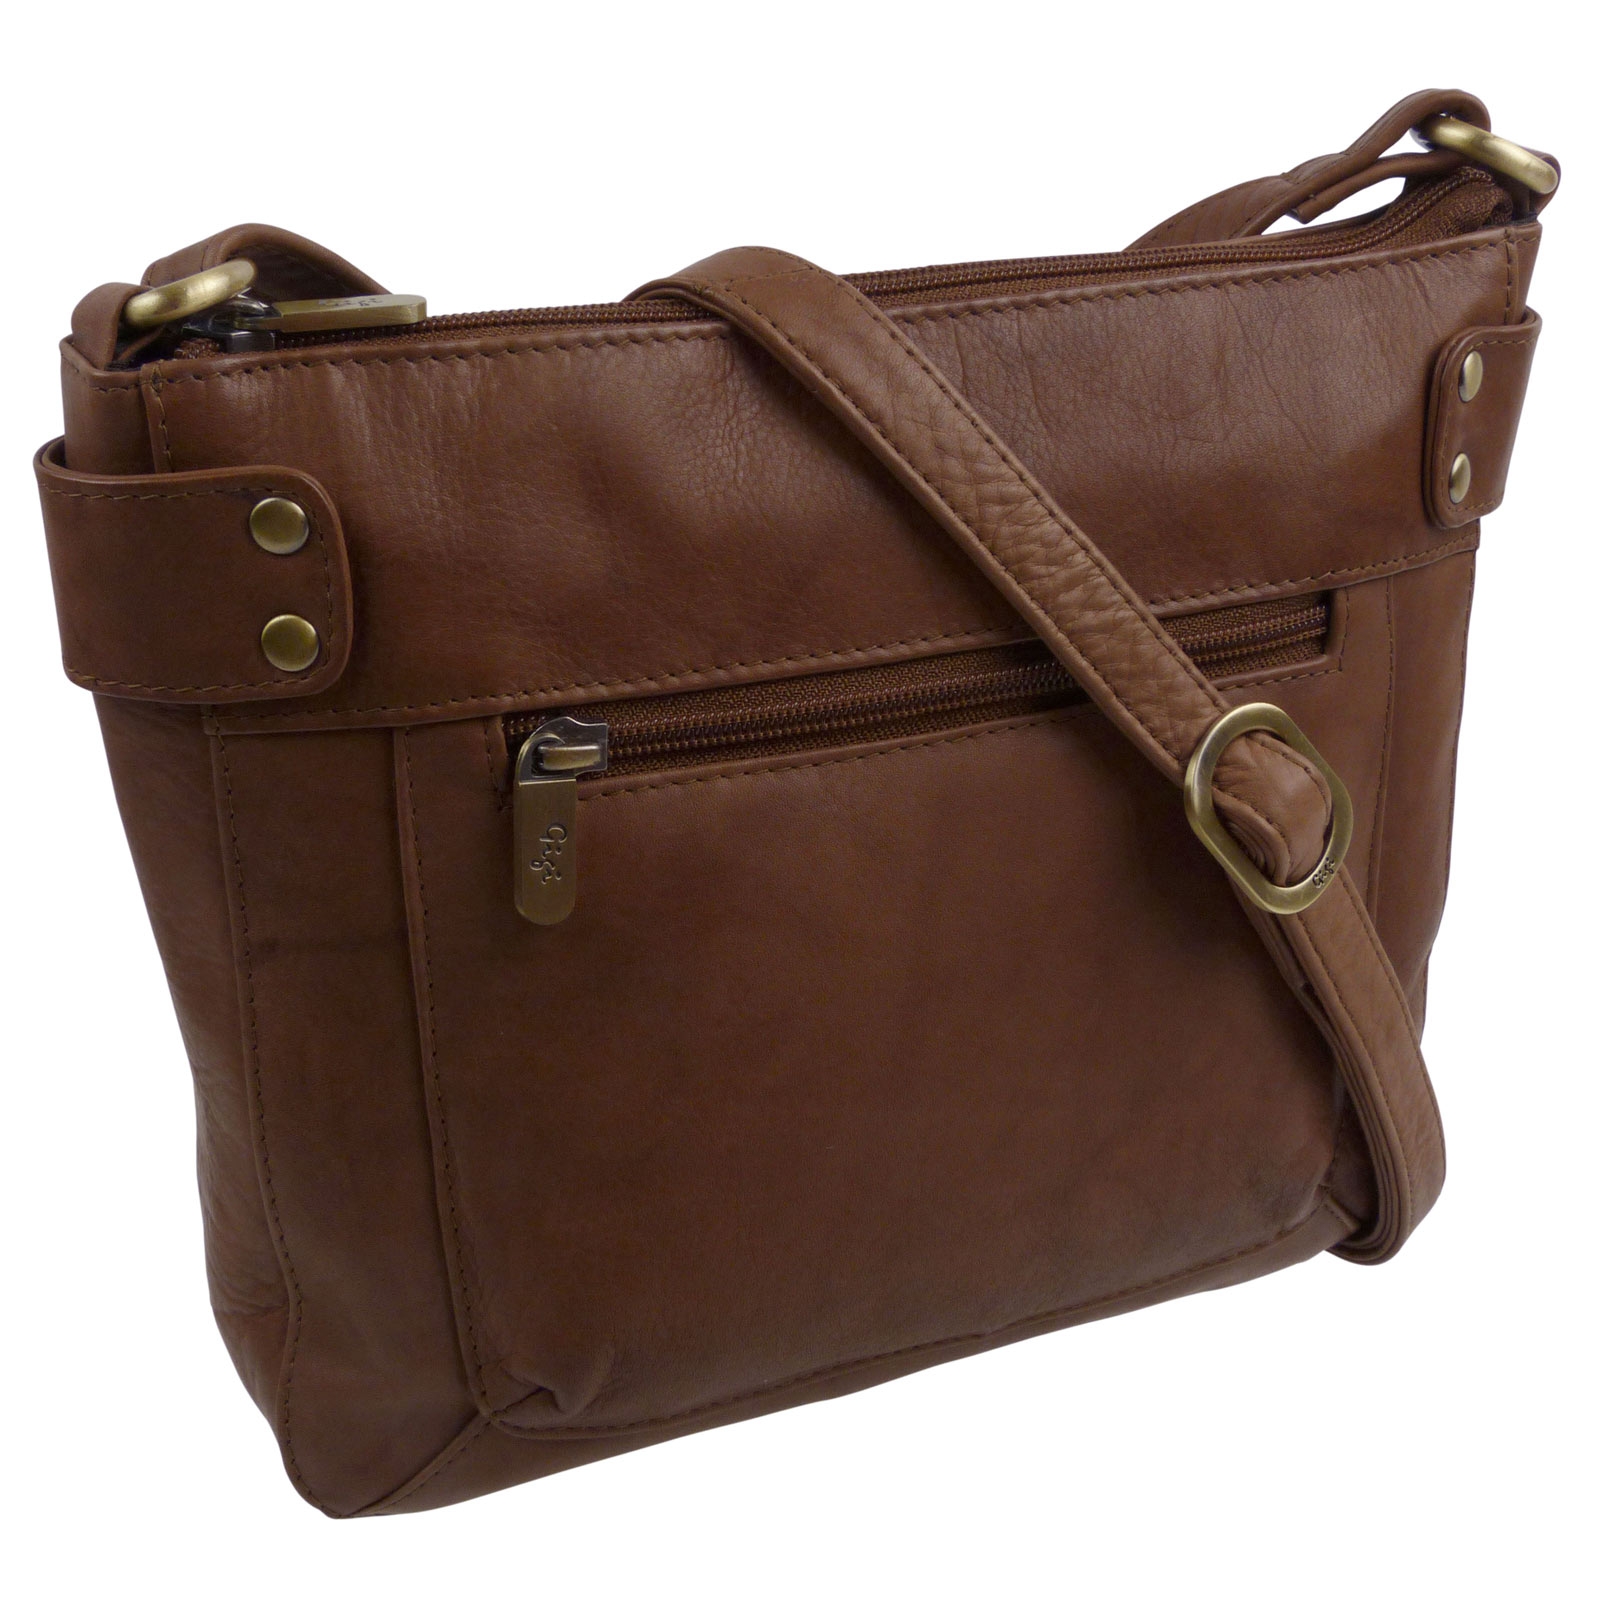 Ladies Soft Leather Small Classic Cross Body Handbag Bag by GiGi Mid-Brown 5055527793398 | eBay